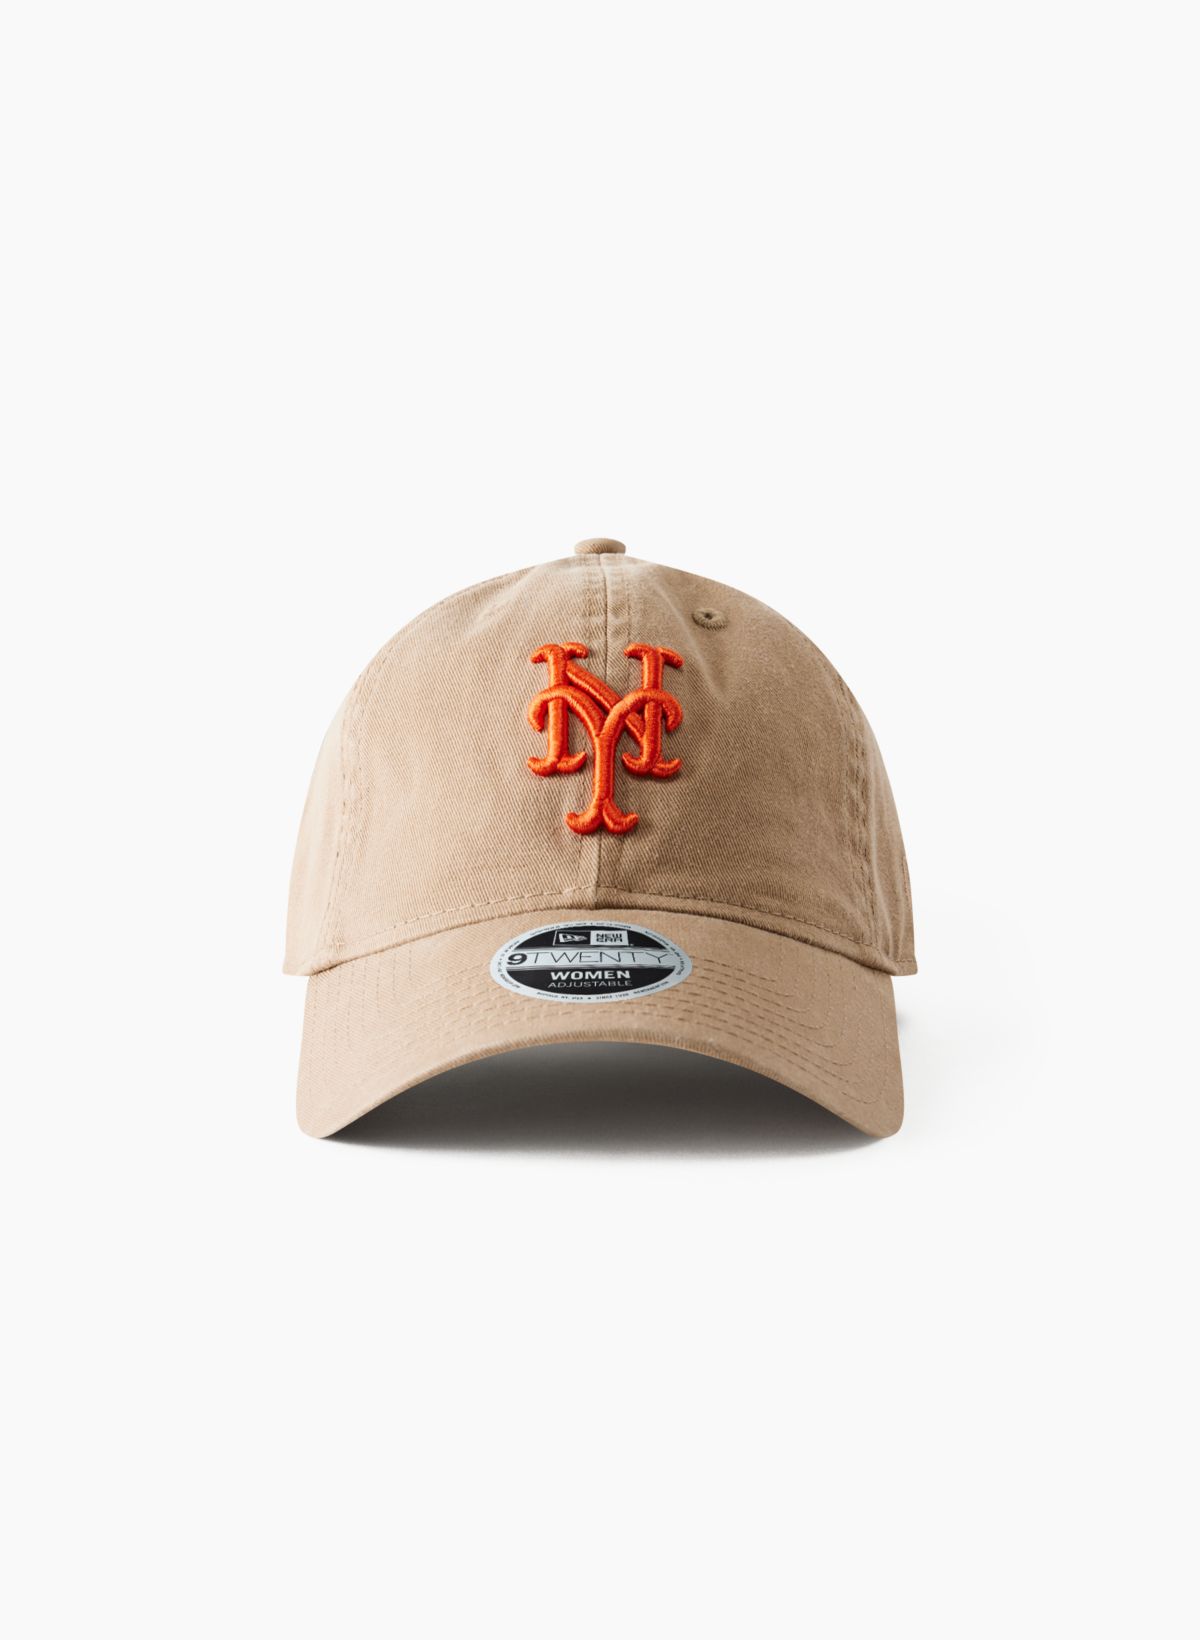 New Era NEW YORK METS BASEBALL CAP